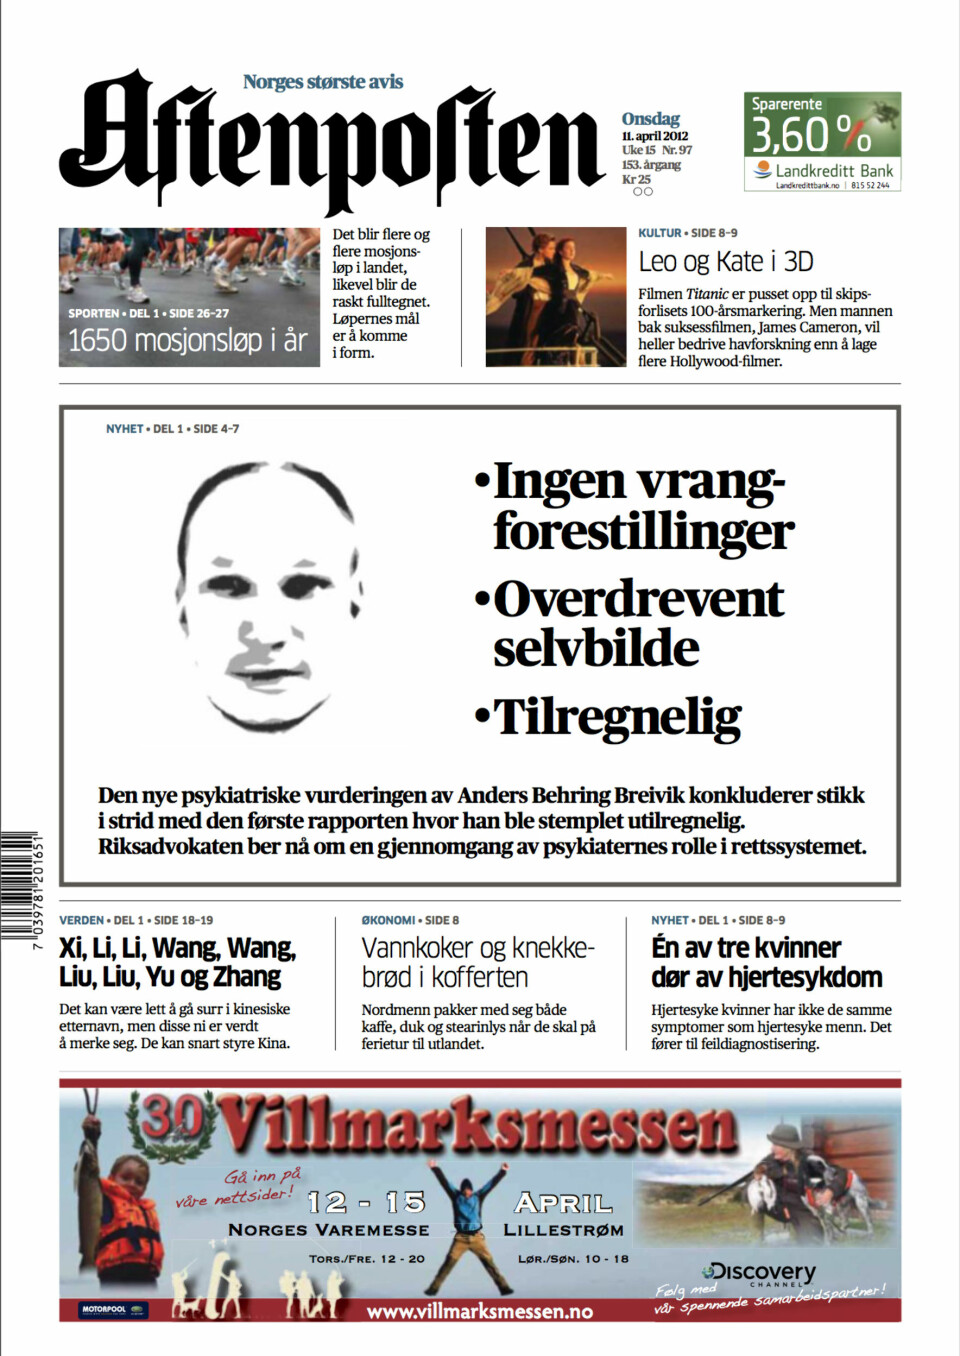 Aftenpostens forside 14.april 2012 - under rettssaken.